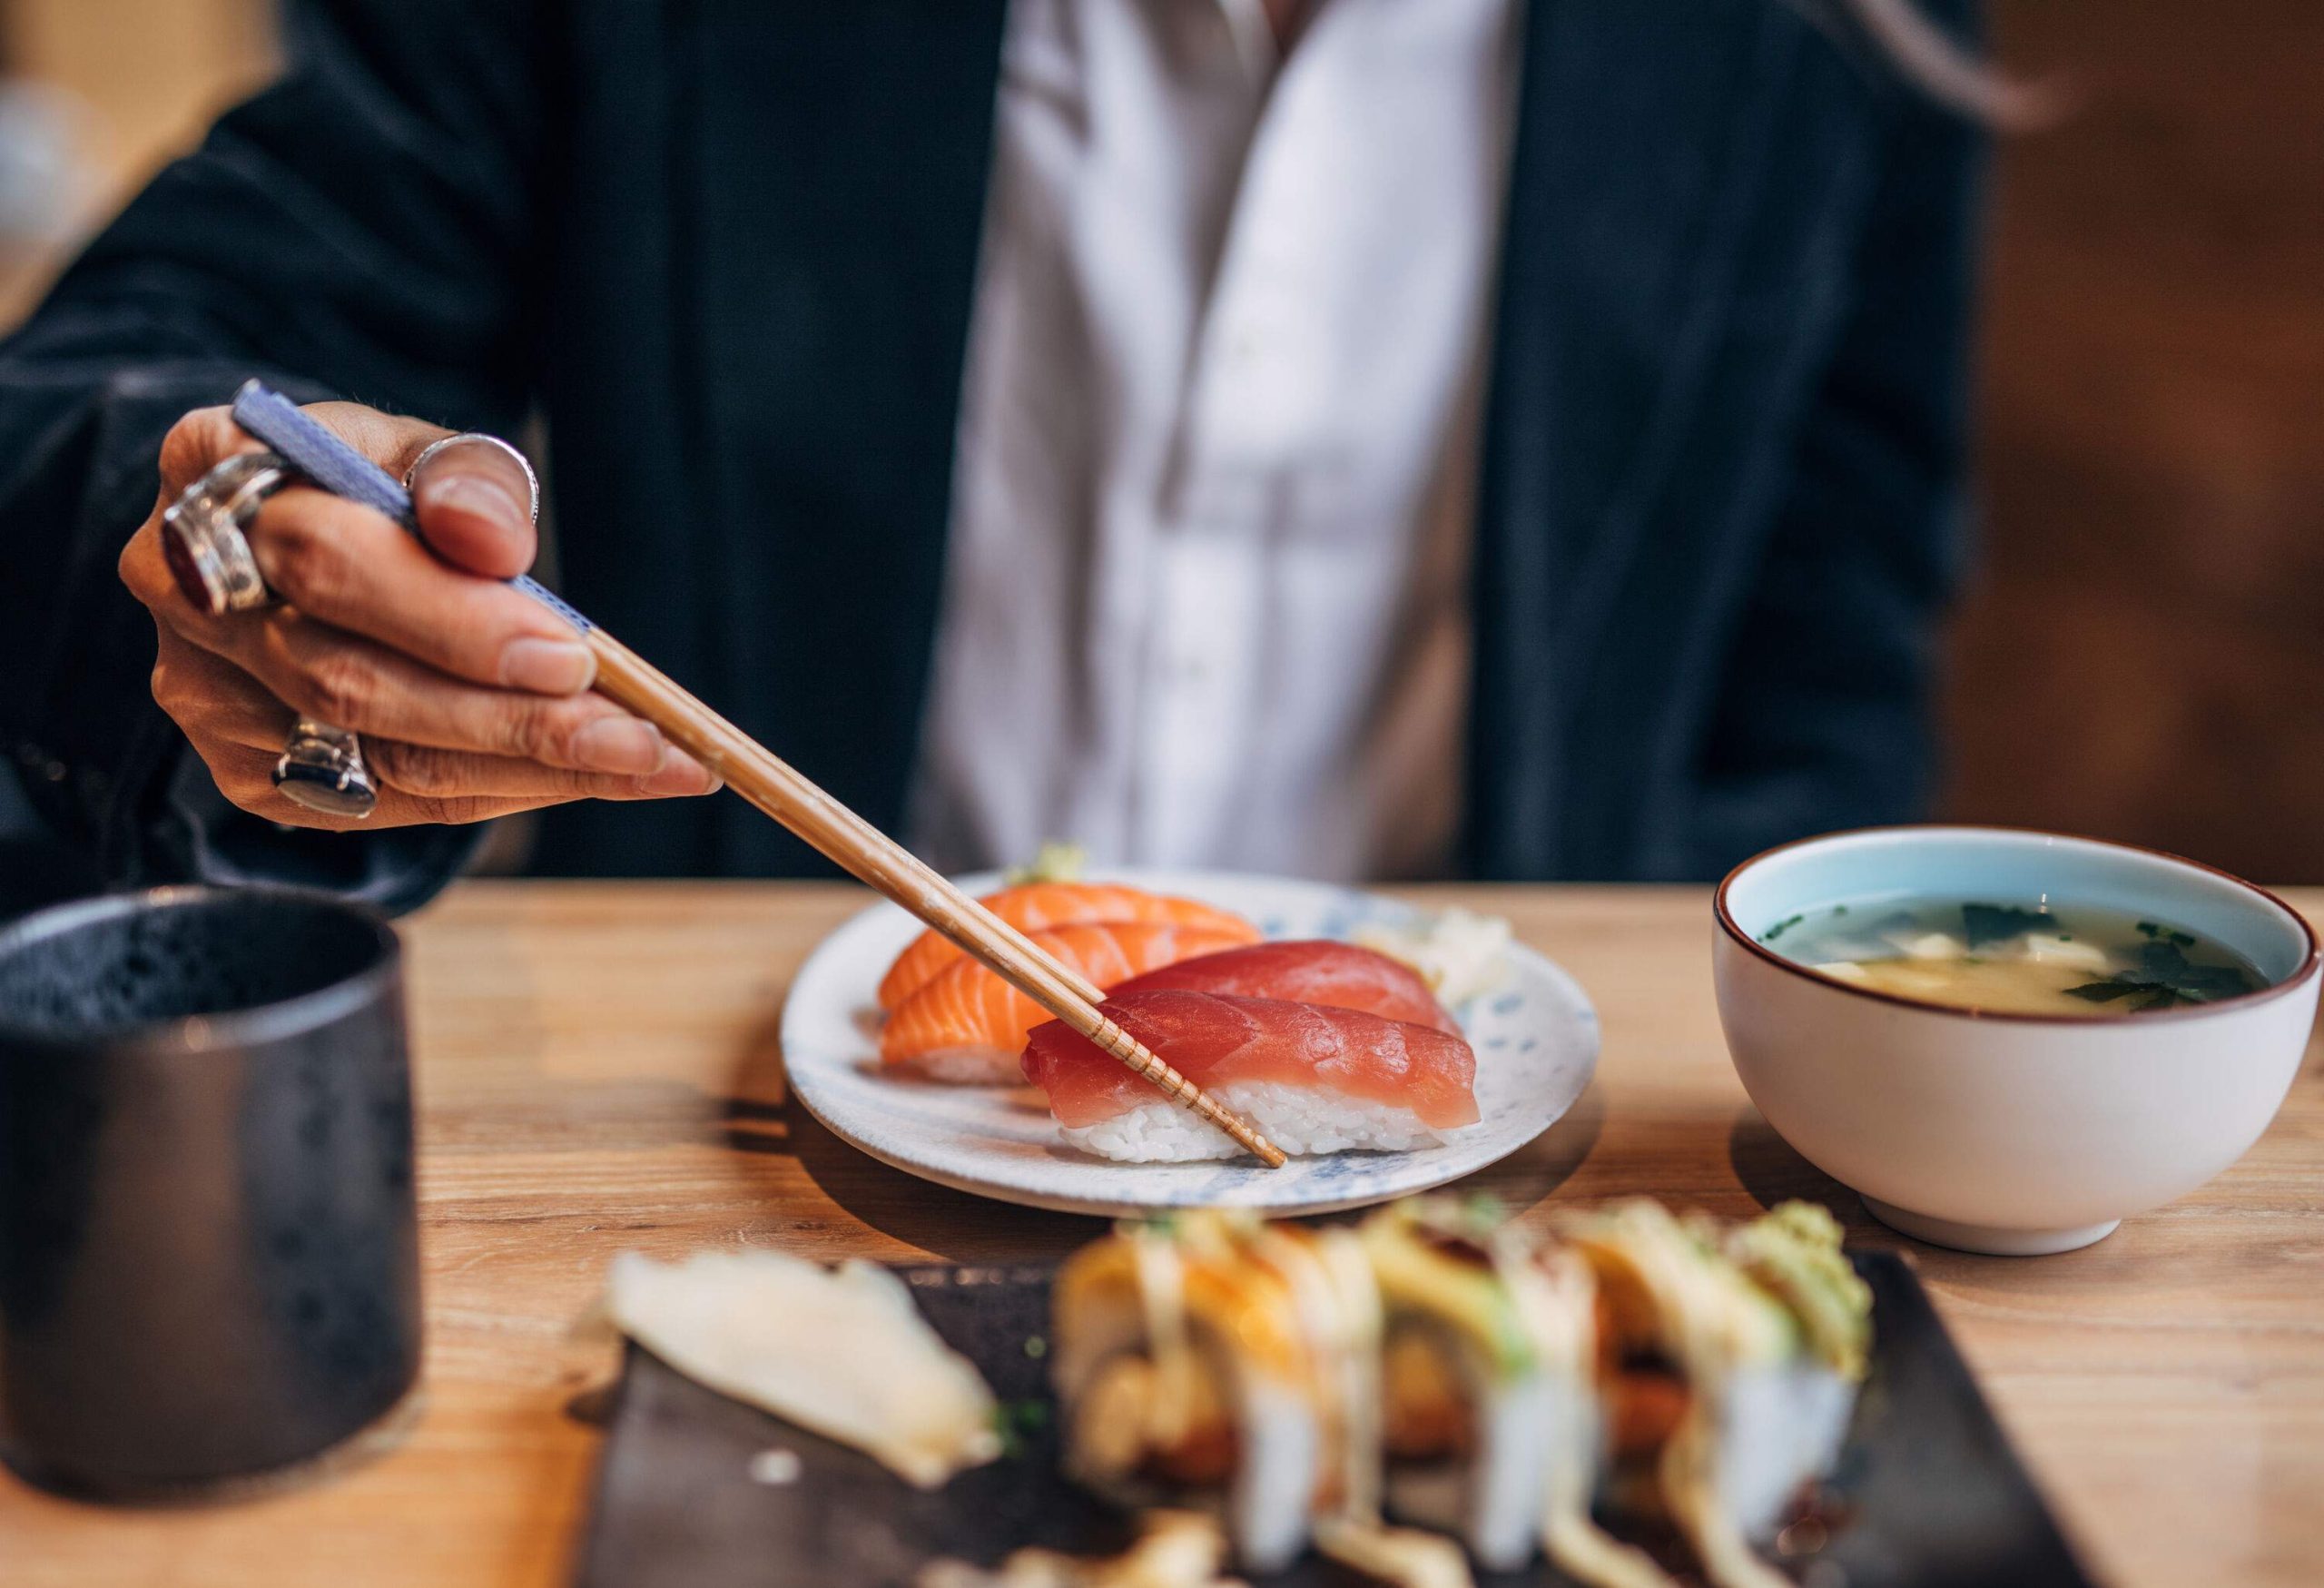 A hand picks a piece of sushi with chopsticks.